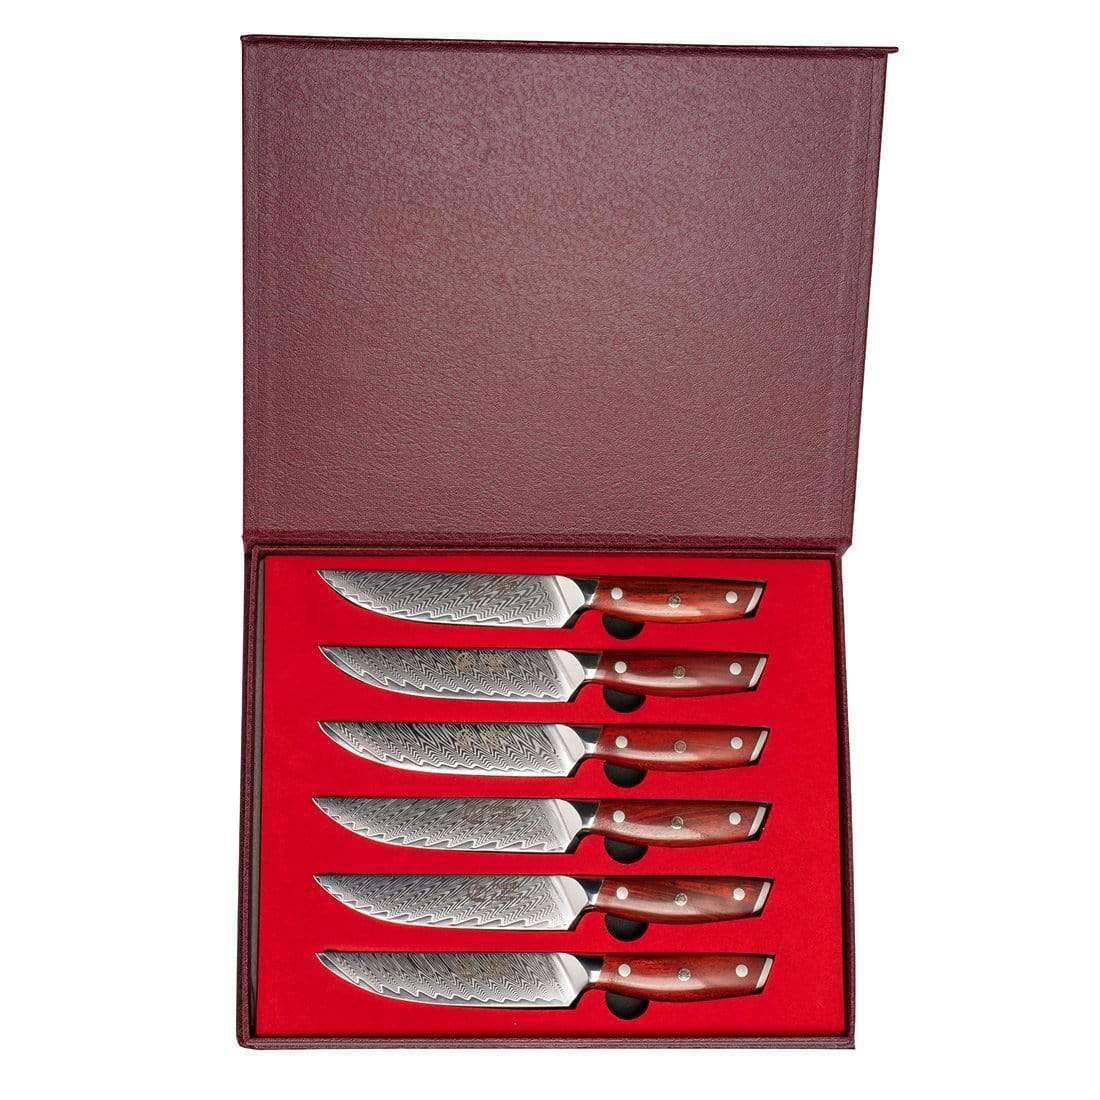 KTF Series - Damascus Steak Knives Set of 6 yarenh Damascus Steel